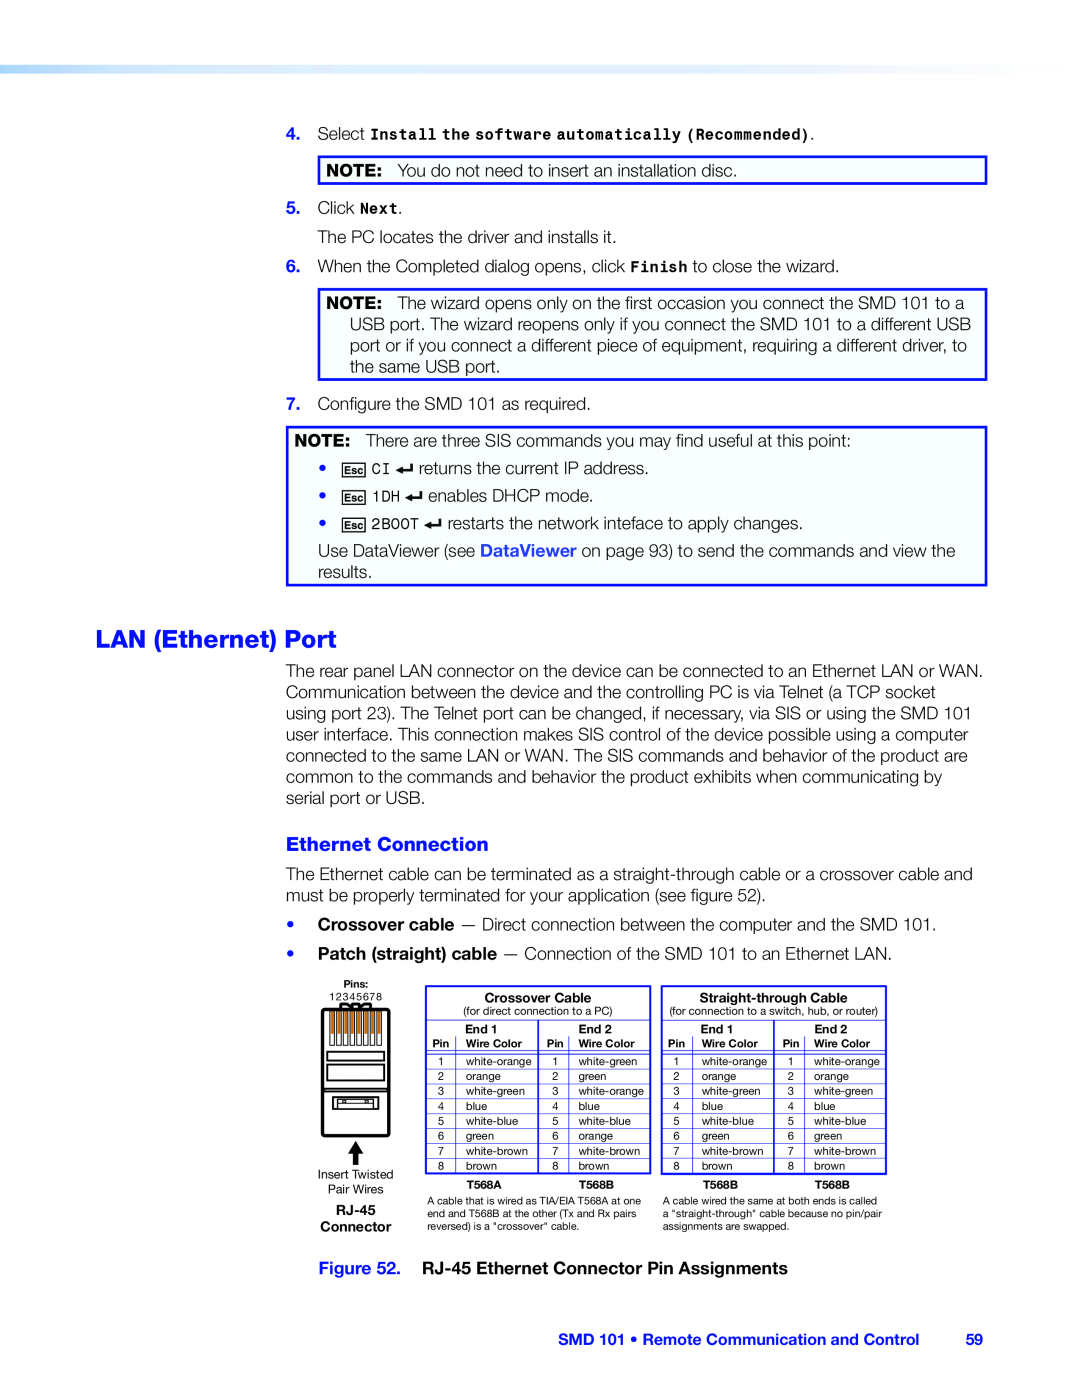 Extron electronic SMD 101 manual LAN Ethernet Port, Ethernet Connection, RJ-45 Ethernet Connector Pin Assignments 